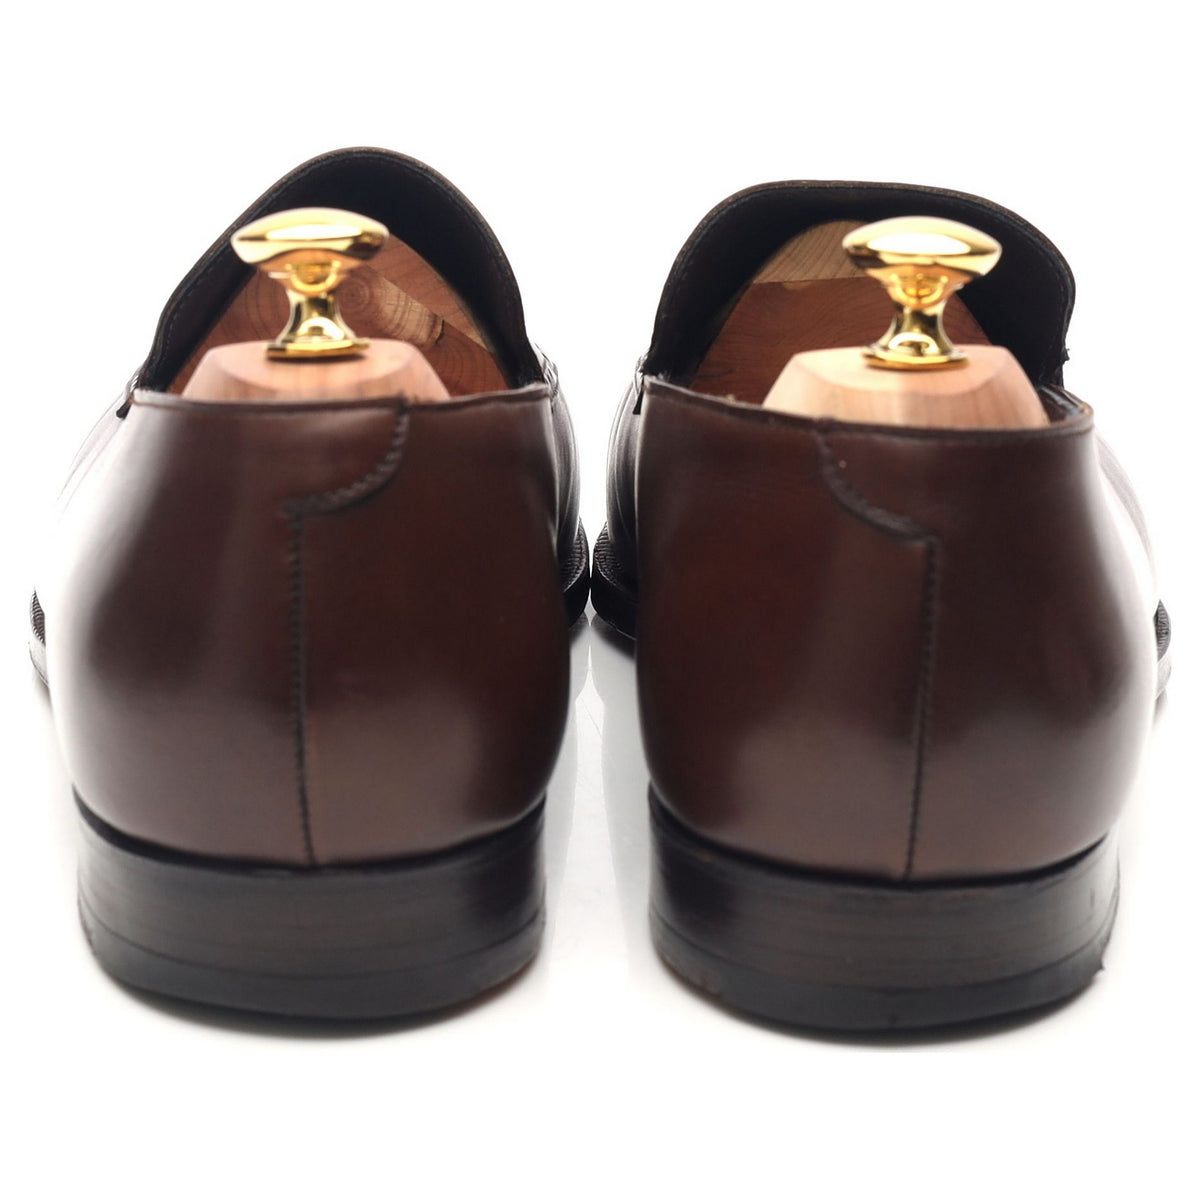 Richard James Dark Brown Leather Loafers UK 11 E